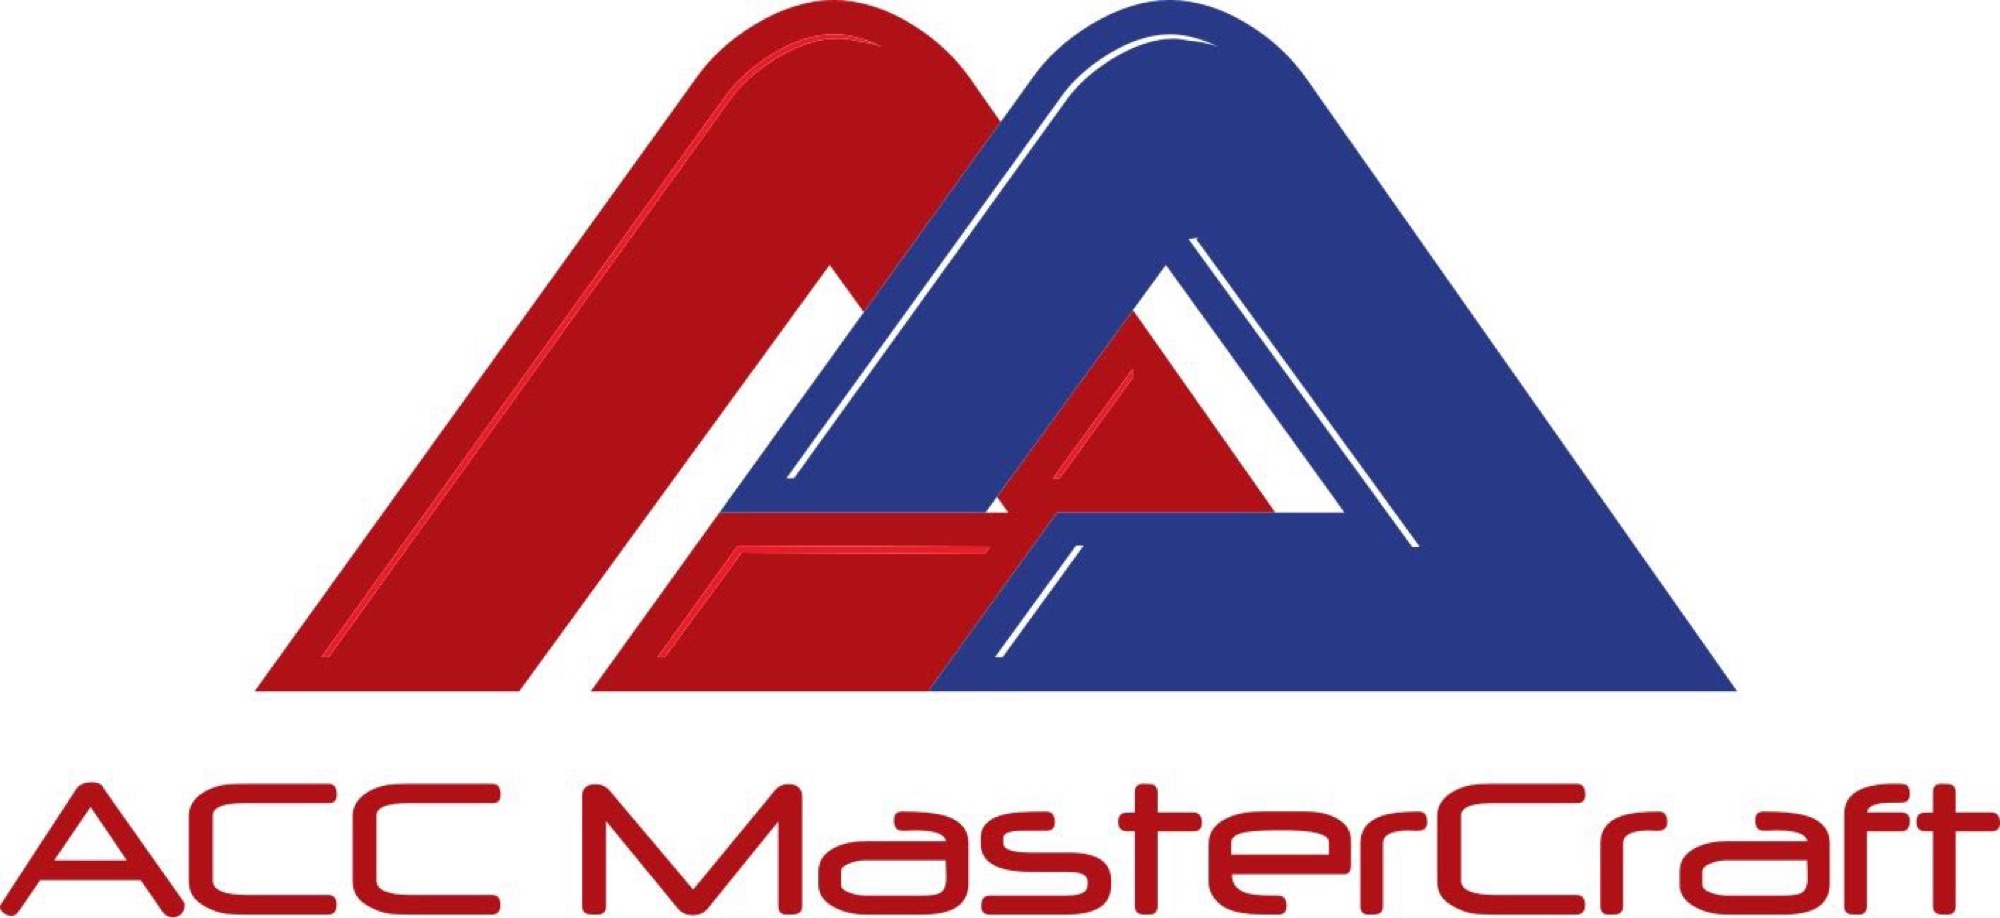 ACC Mastercraft Roofing Contractors Inc. Logo